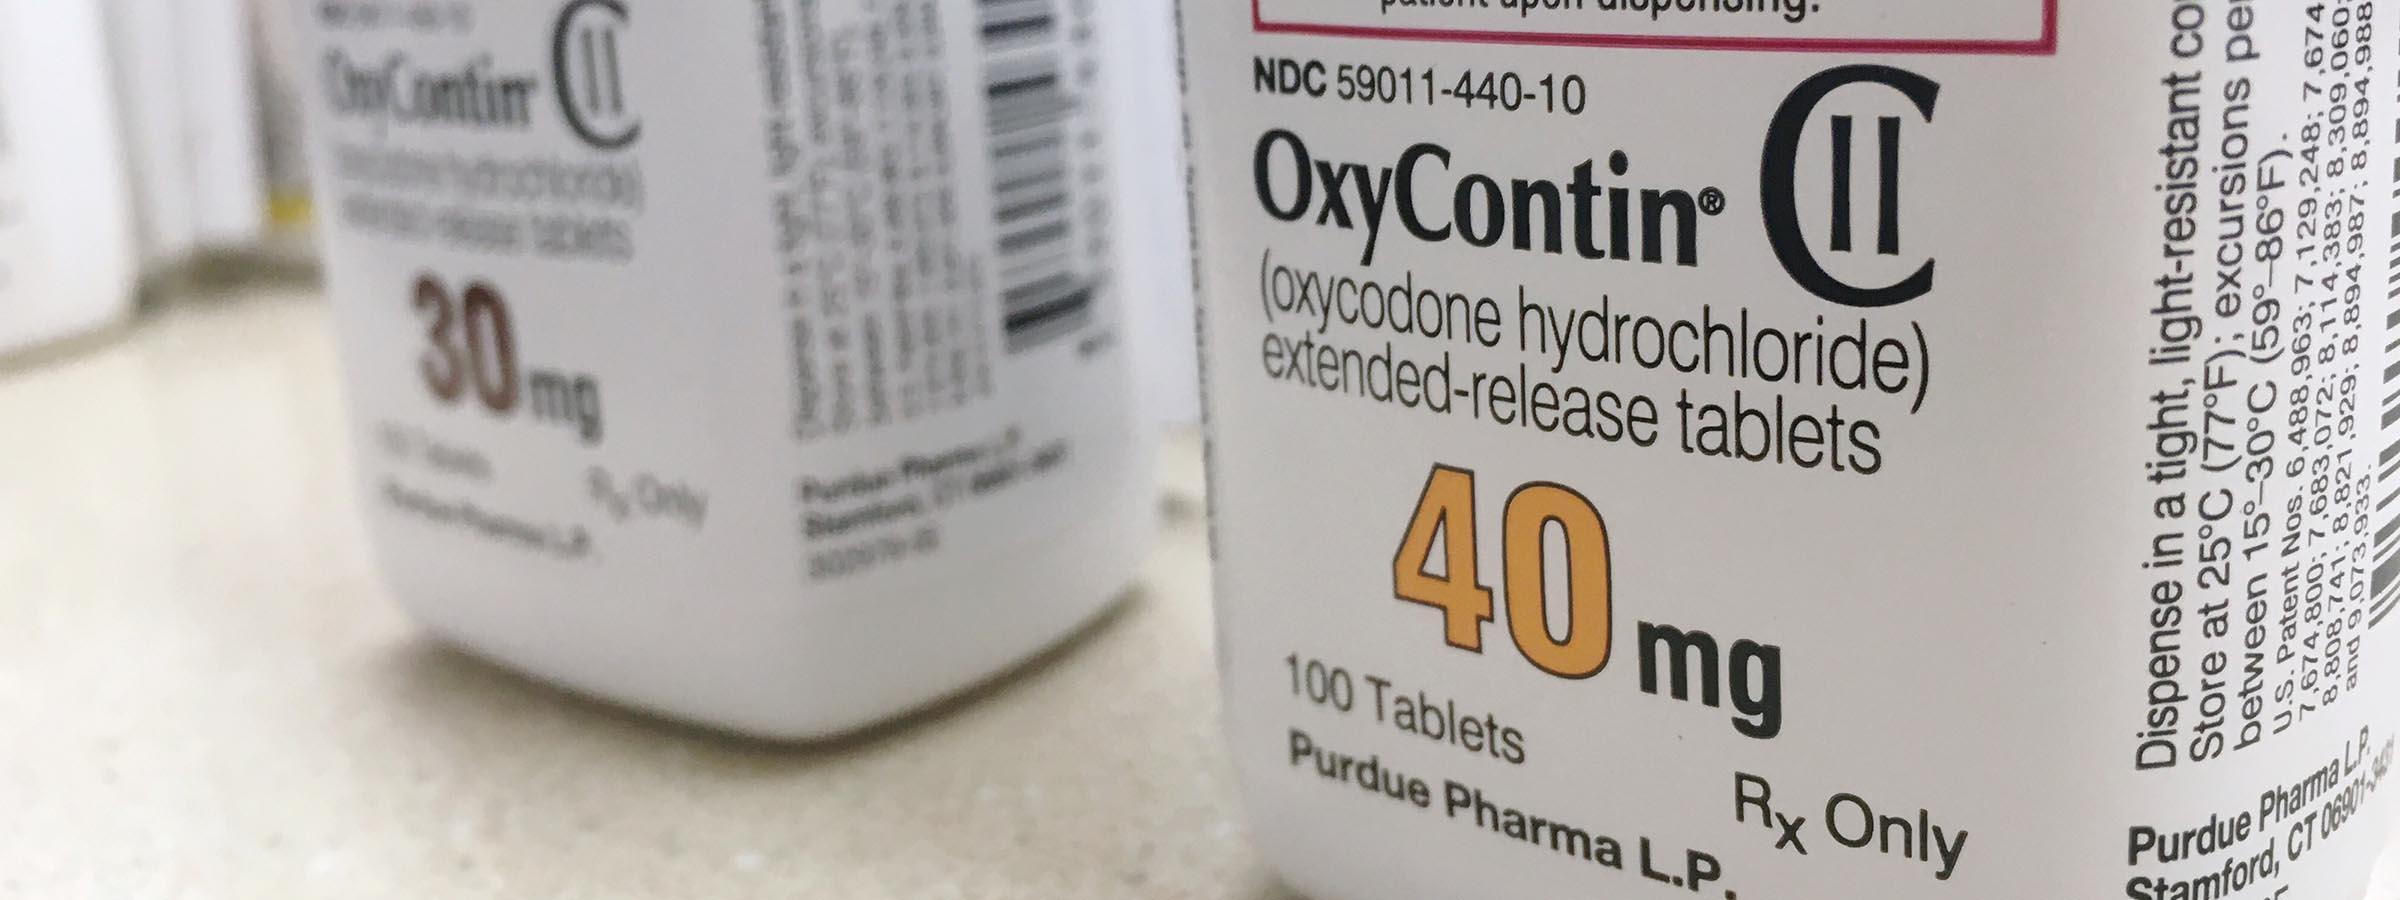 OxyContin prescription bottles